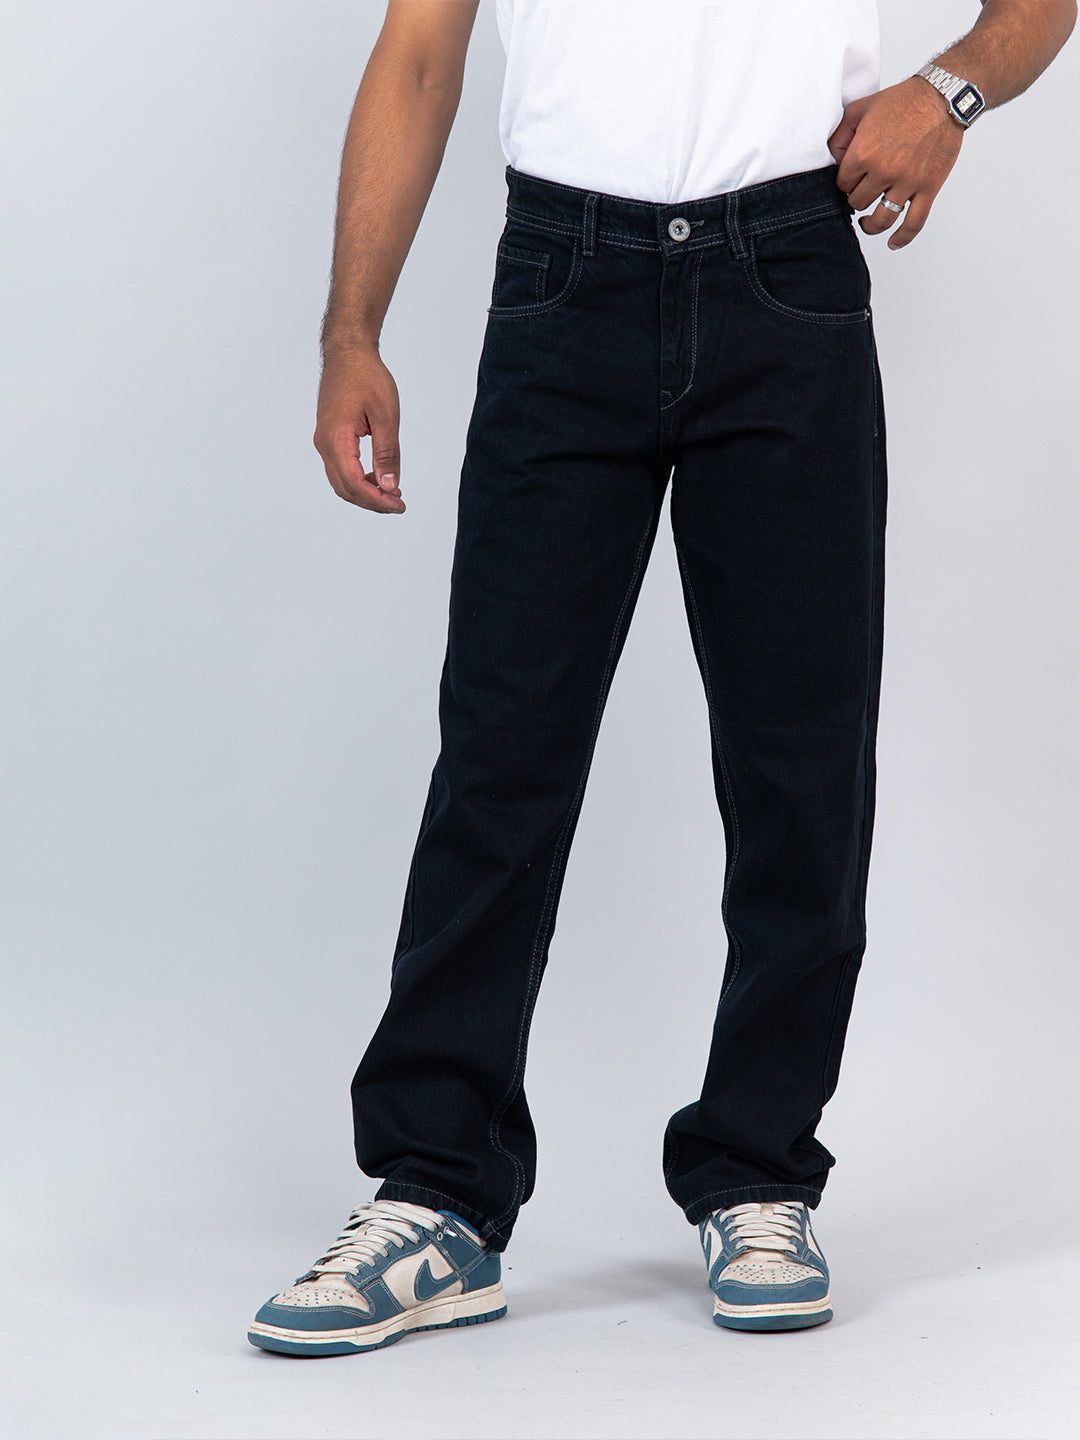 Men's Jeans | Selvedge, Stretch, Skinny, Slim, Regular fit | UNIQLO